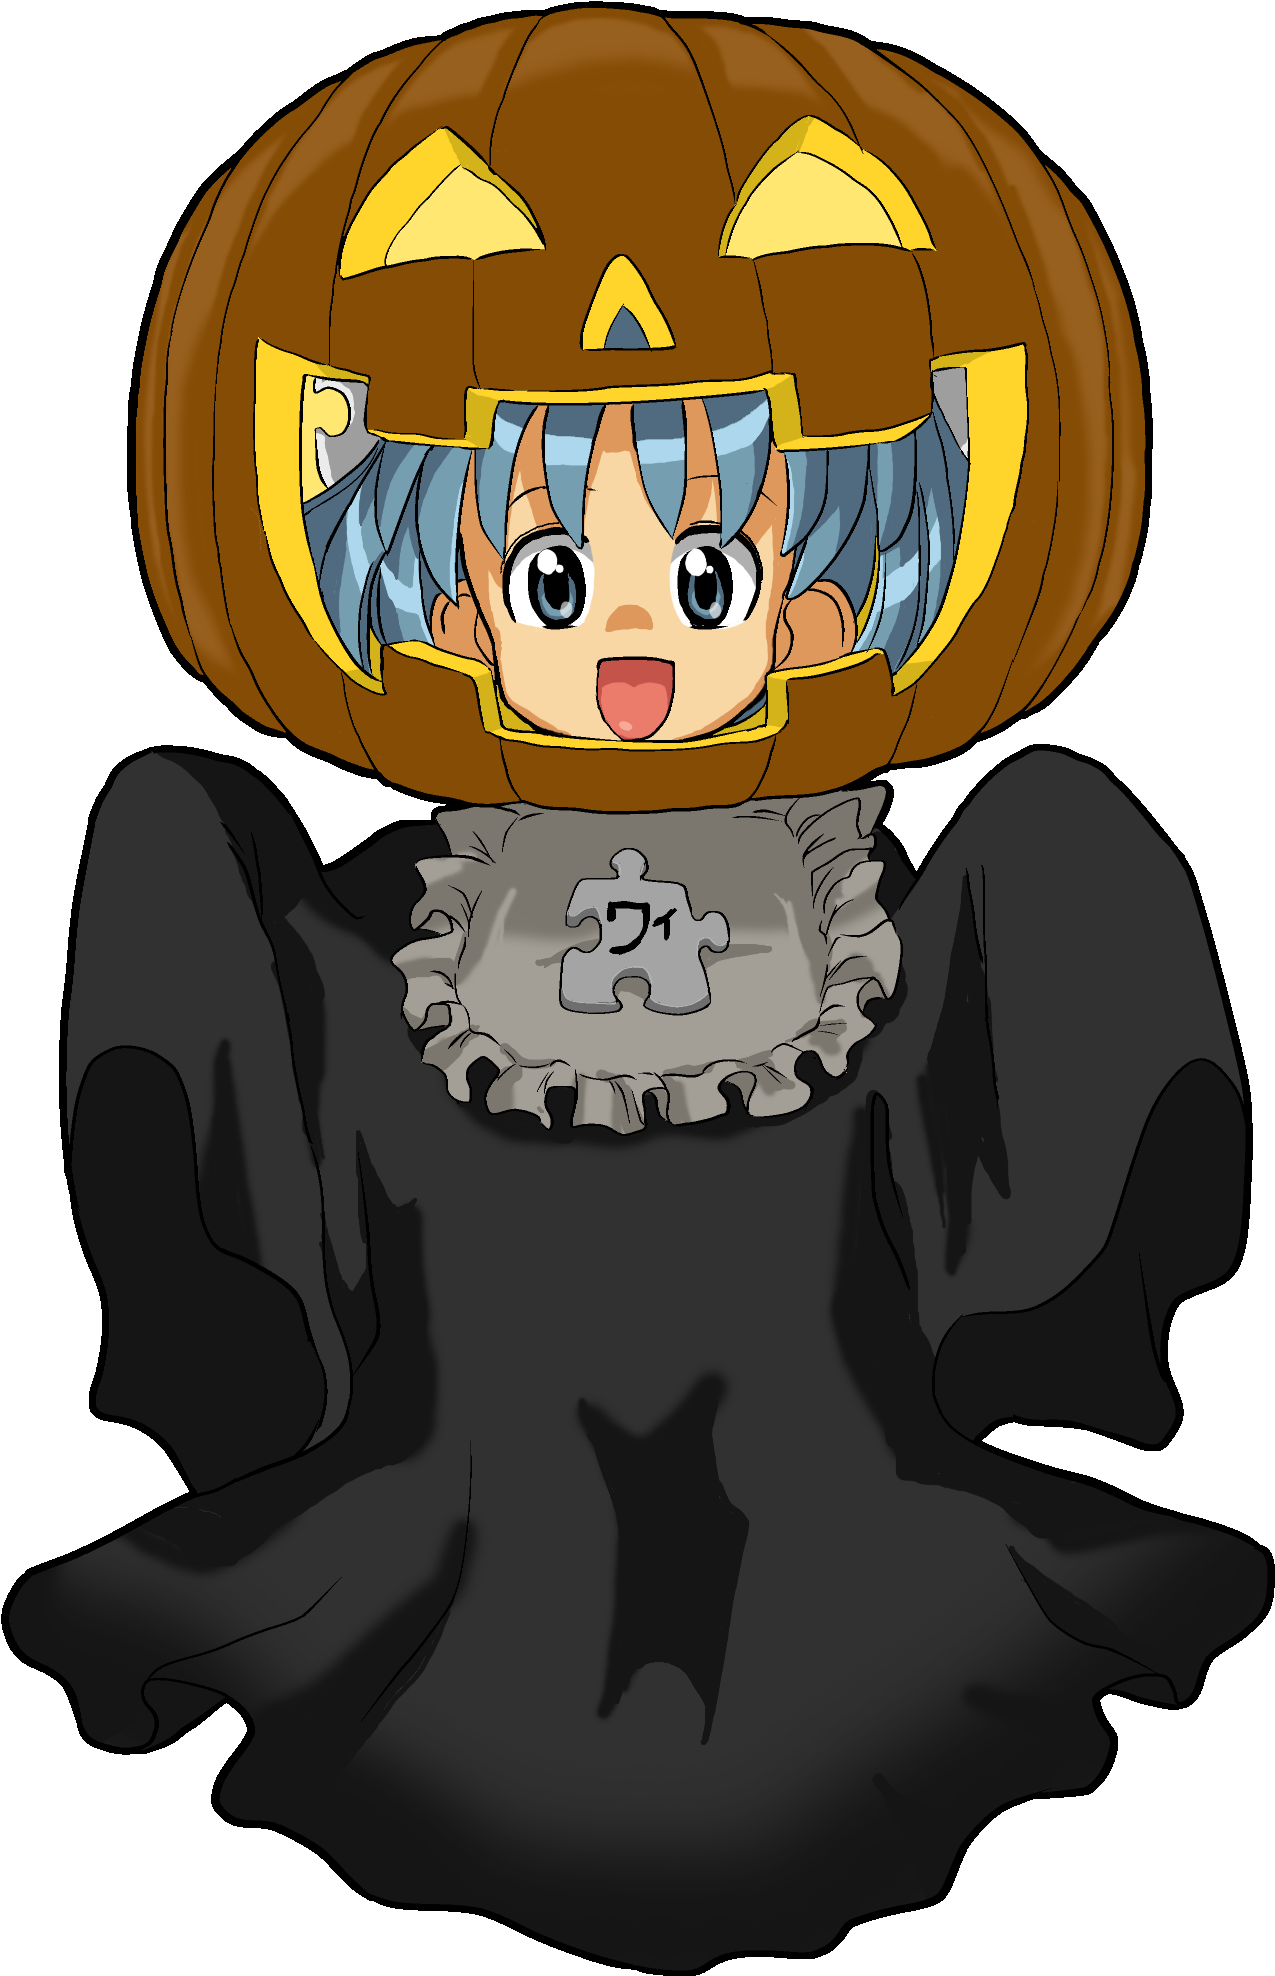 Wikipe-tan Dressed In A Halloween Costume - Halloween Costume (1350x2050)